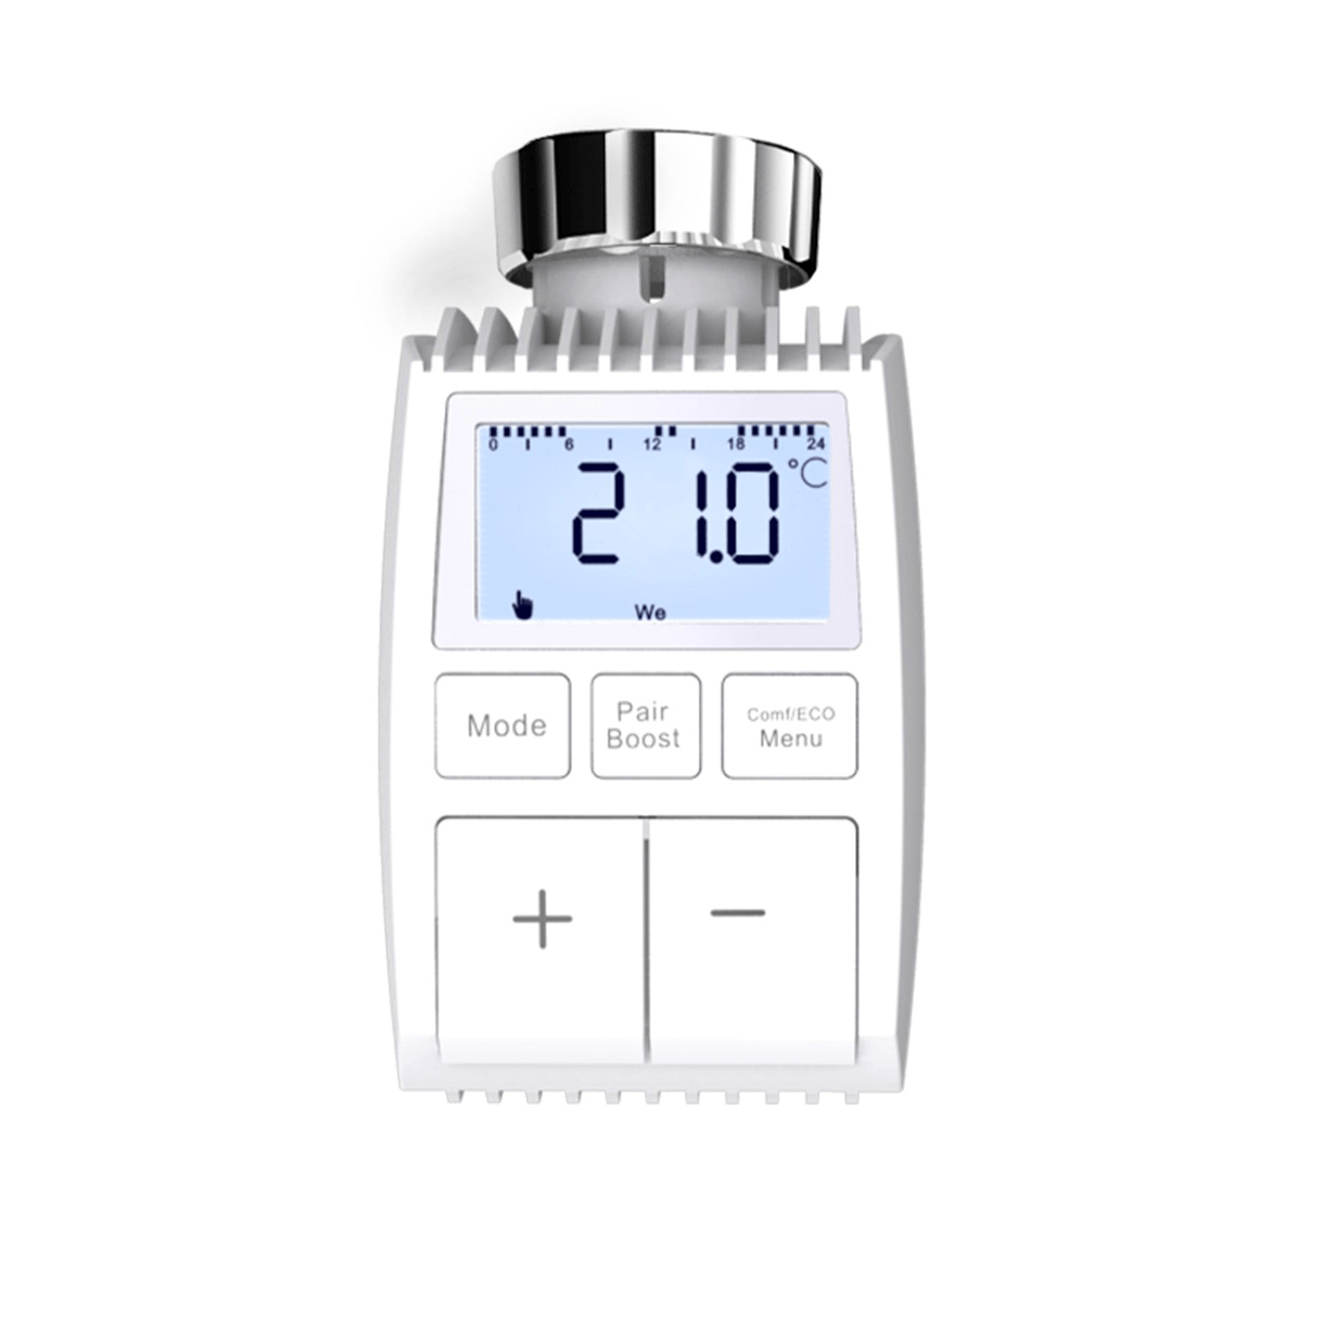 Tuya ZigBee3.0 Smart Programmable Thermostat Radiator Actuator Valve Temperature Controller - MOES